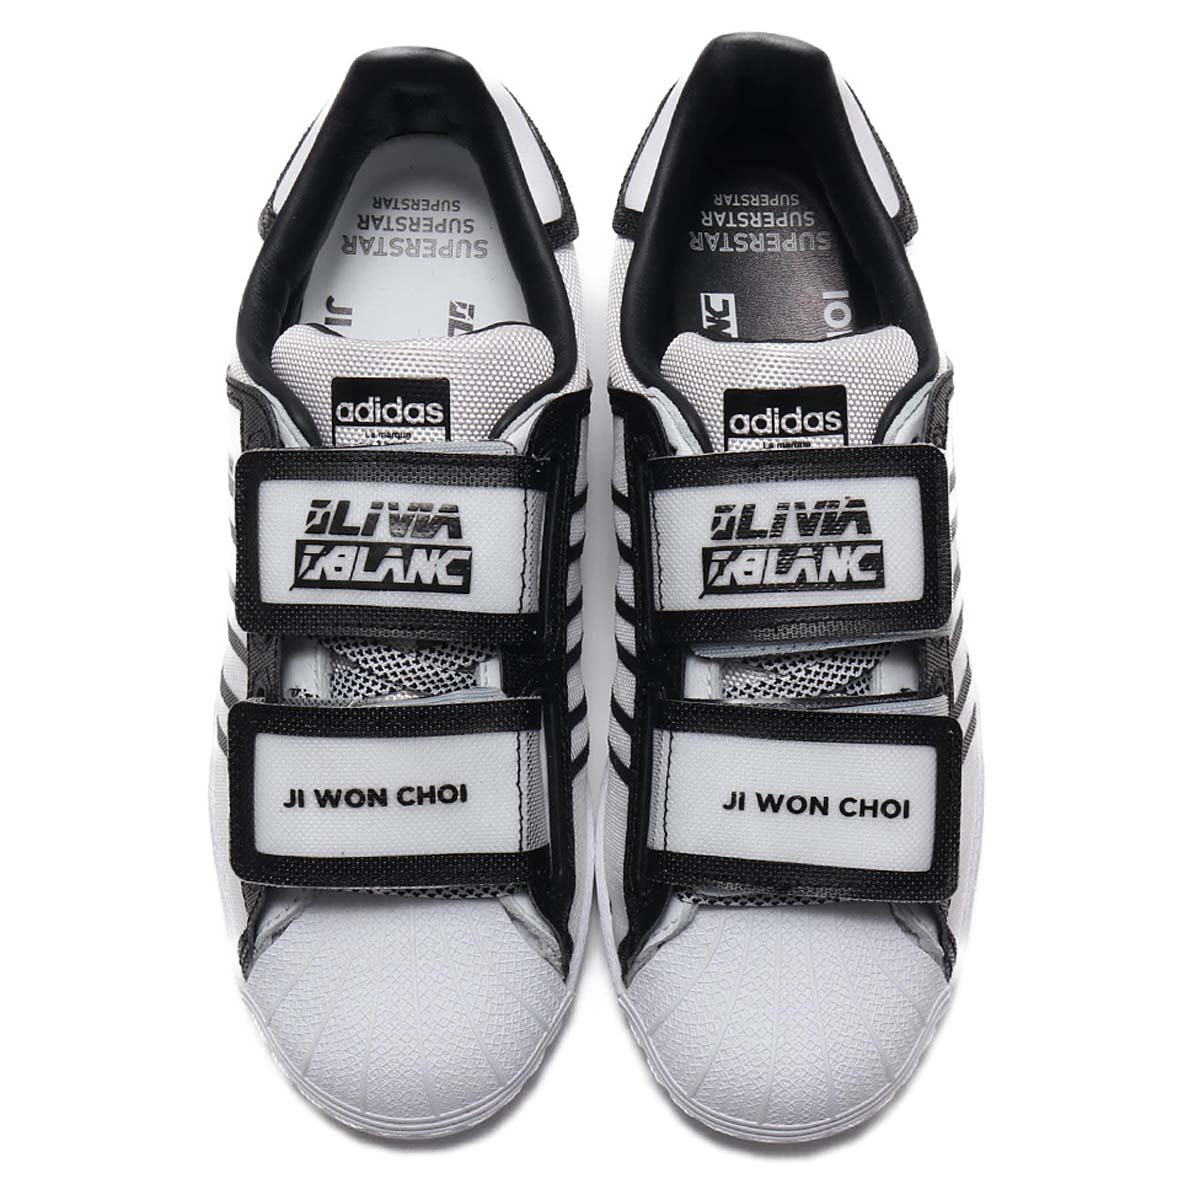 JI WON CHOI x Olivia LeBlanc x adidas SUPERSTAR FOOTWEAR WHITE / CORE BLACK / SCARLET FW6635 ジウォン・チェ x オリビア・ルブラン x アディダス スーパースター ホワイト/ブラック/レッド